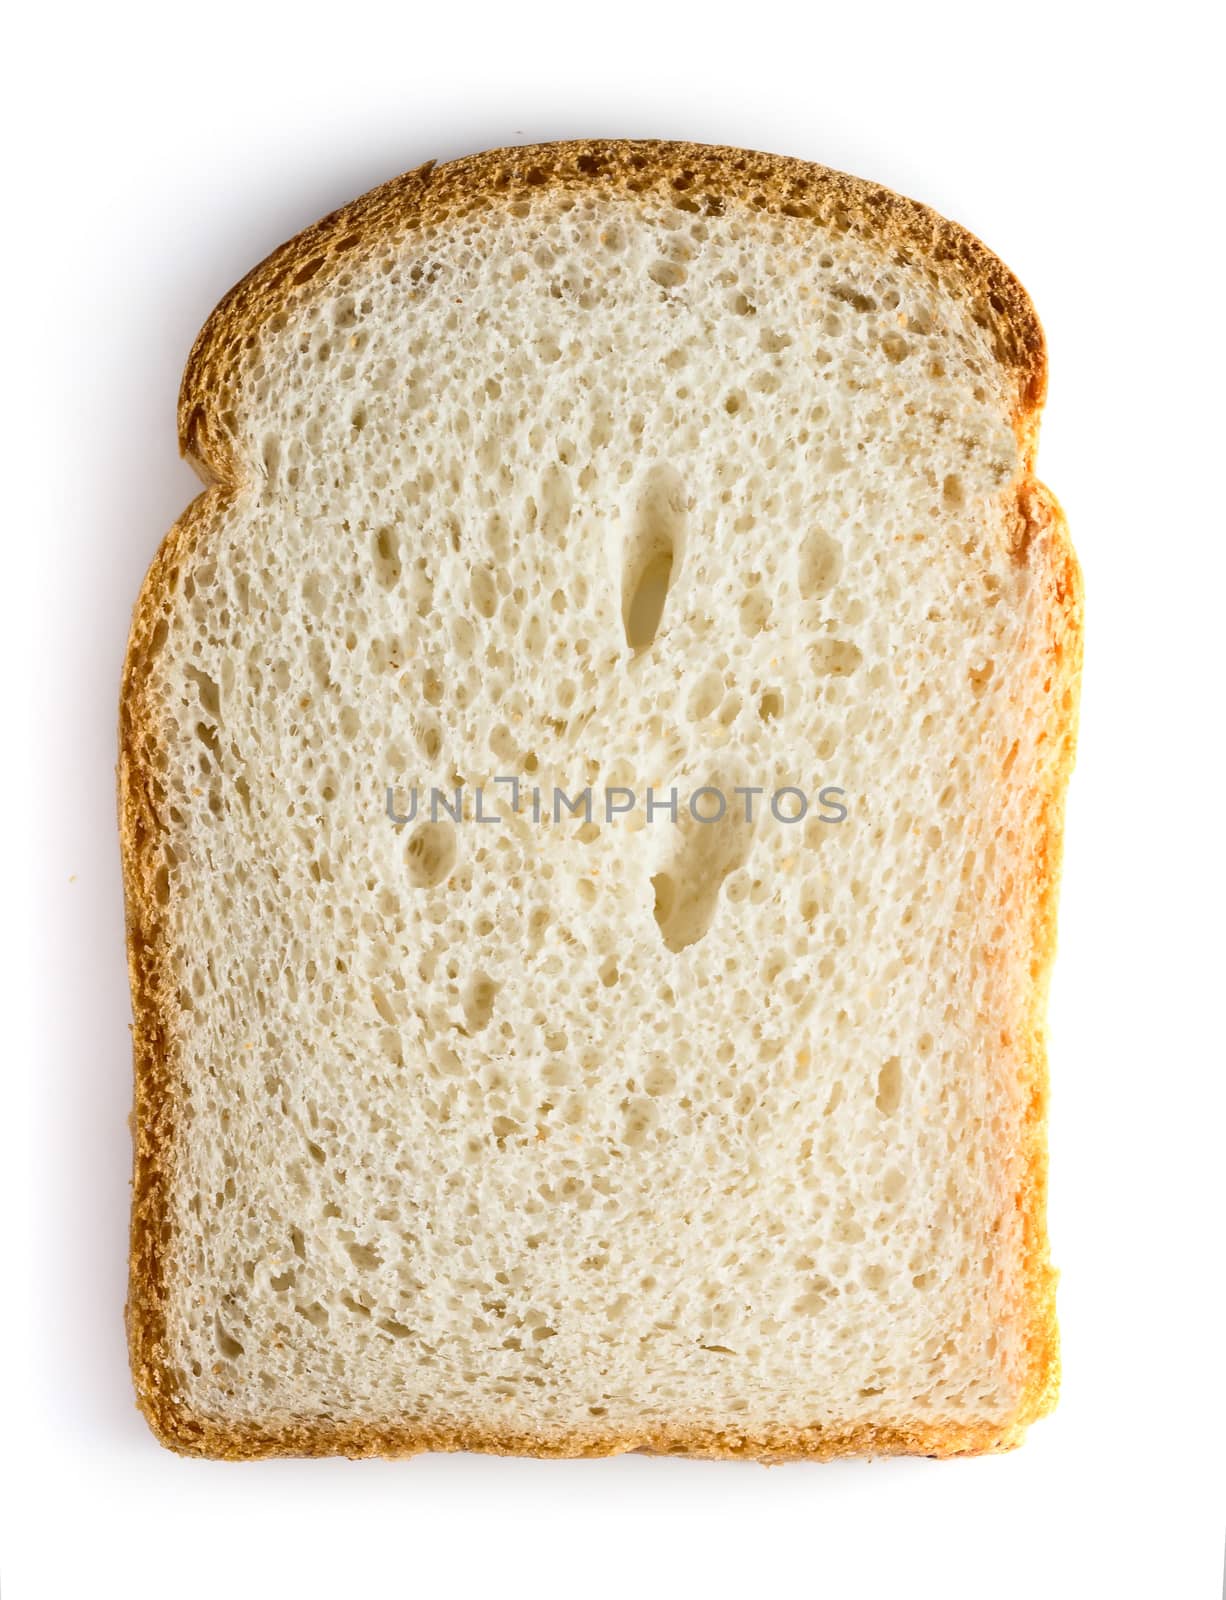 white bread slice isolated on white background